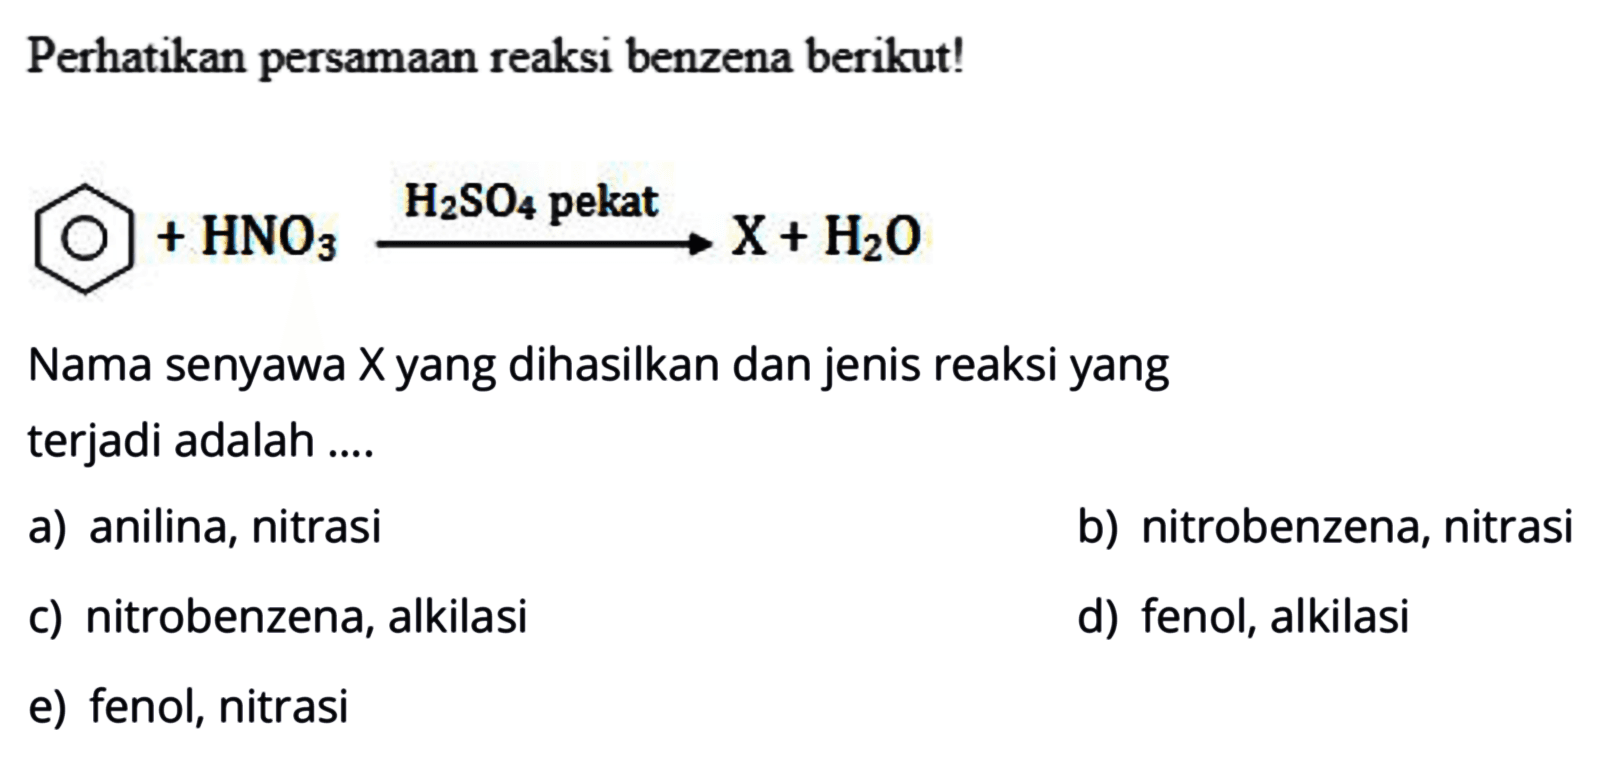 Perhatikan persamaan reaksi benzena berikut!
HNO3 H2SO4 pekat X+H2O
Nama senyawa Xyang dihasilkan dan jenis reaksi yang terjadi adalah ....
a) anilina, nitrasi
b) nitrobenzena, nitrasi
c) nitrobenzena, alkilasi
d) fenol, alkilasi
e) fenol, nitrasi